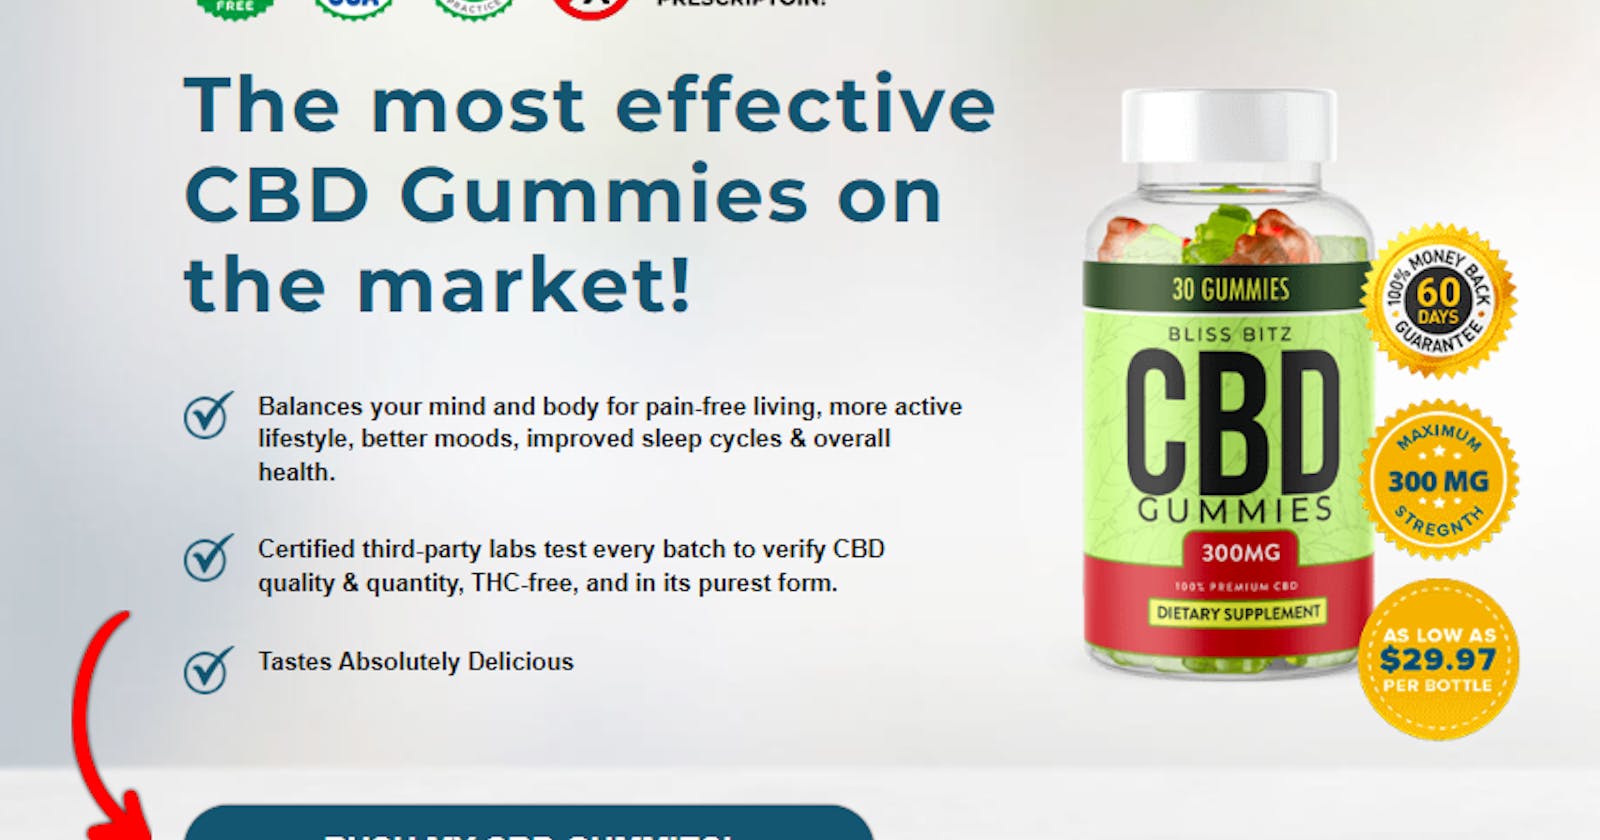 Bliss Blitz CBD Gummies Reviews 2023, Ingredients, Side-Effects (Canada)